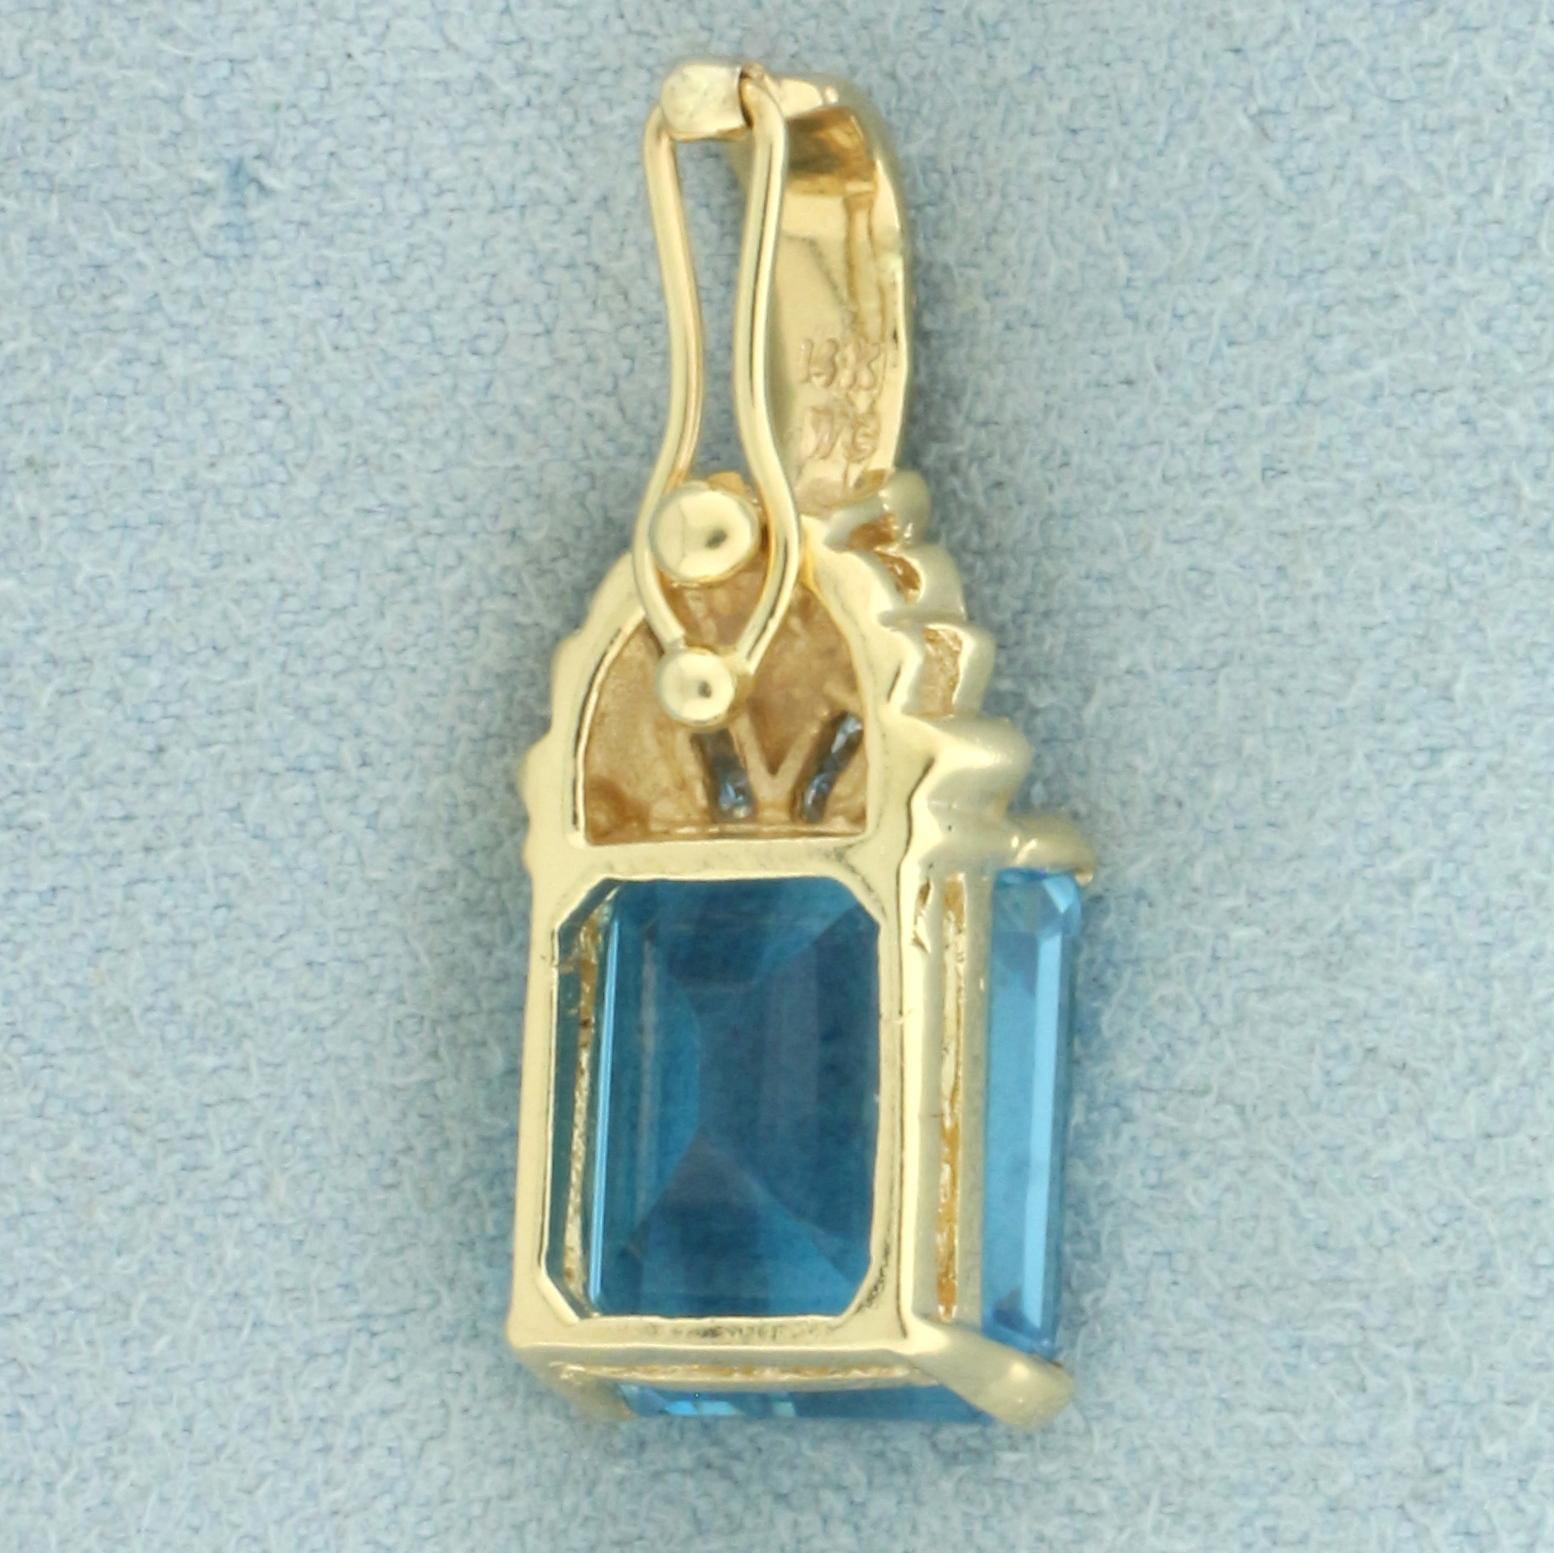 Swiss Blue Topaz And Diamond Pendant In 14k Yellow Gold